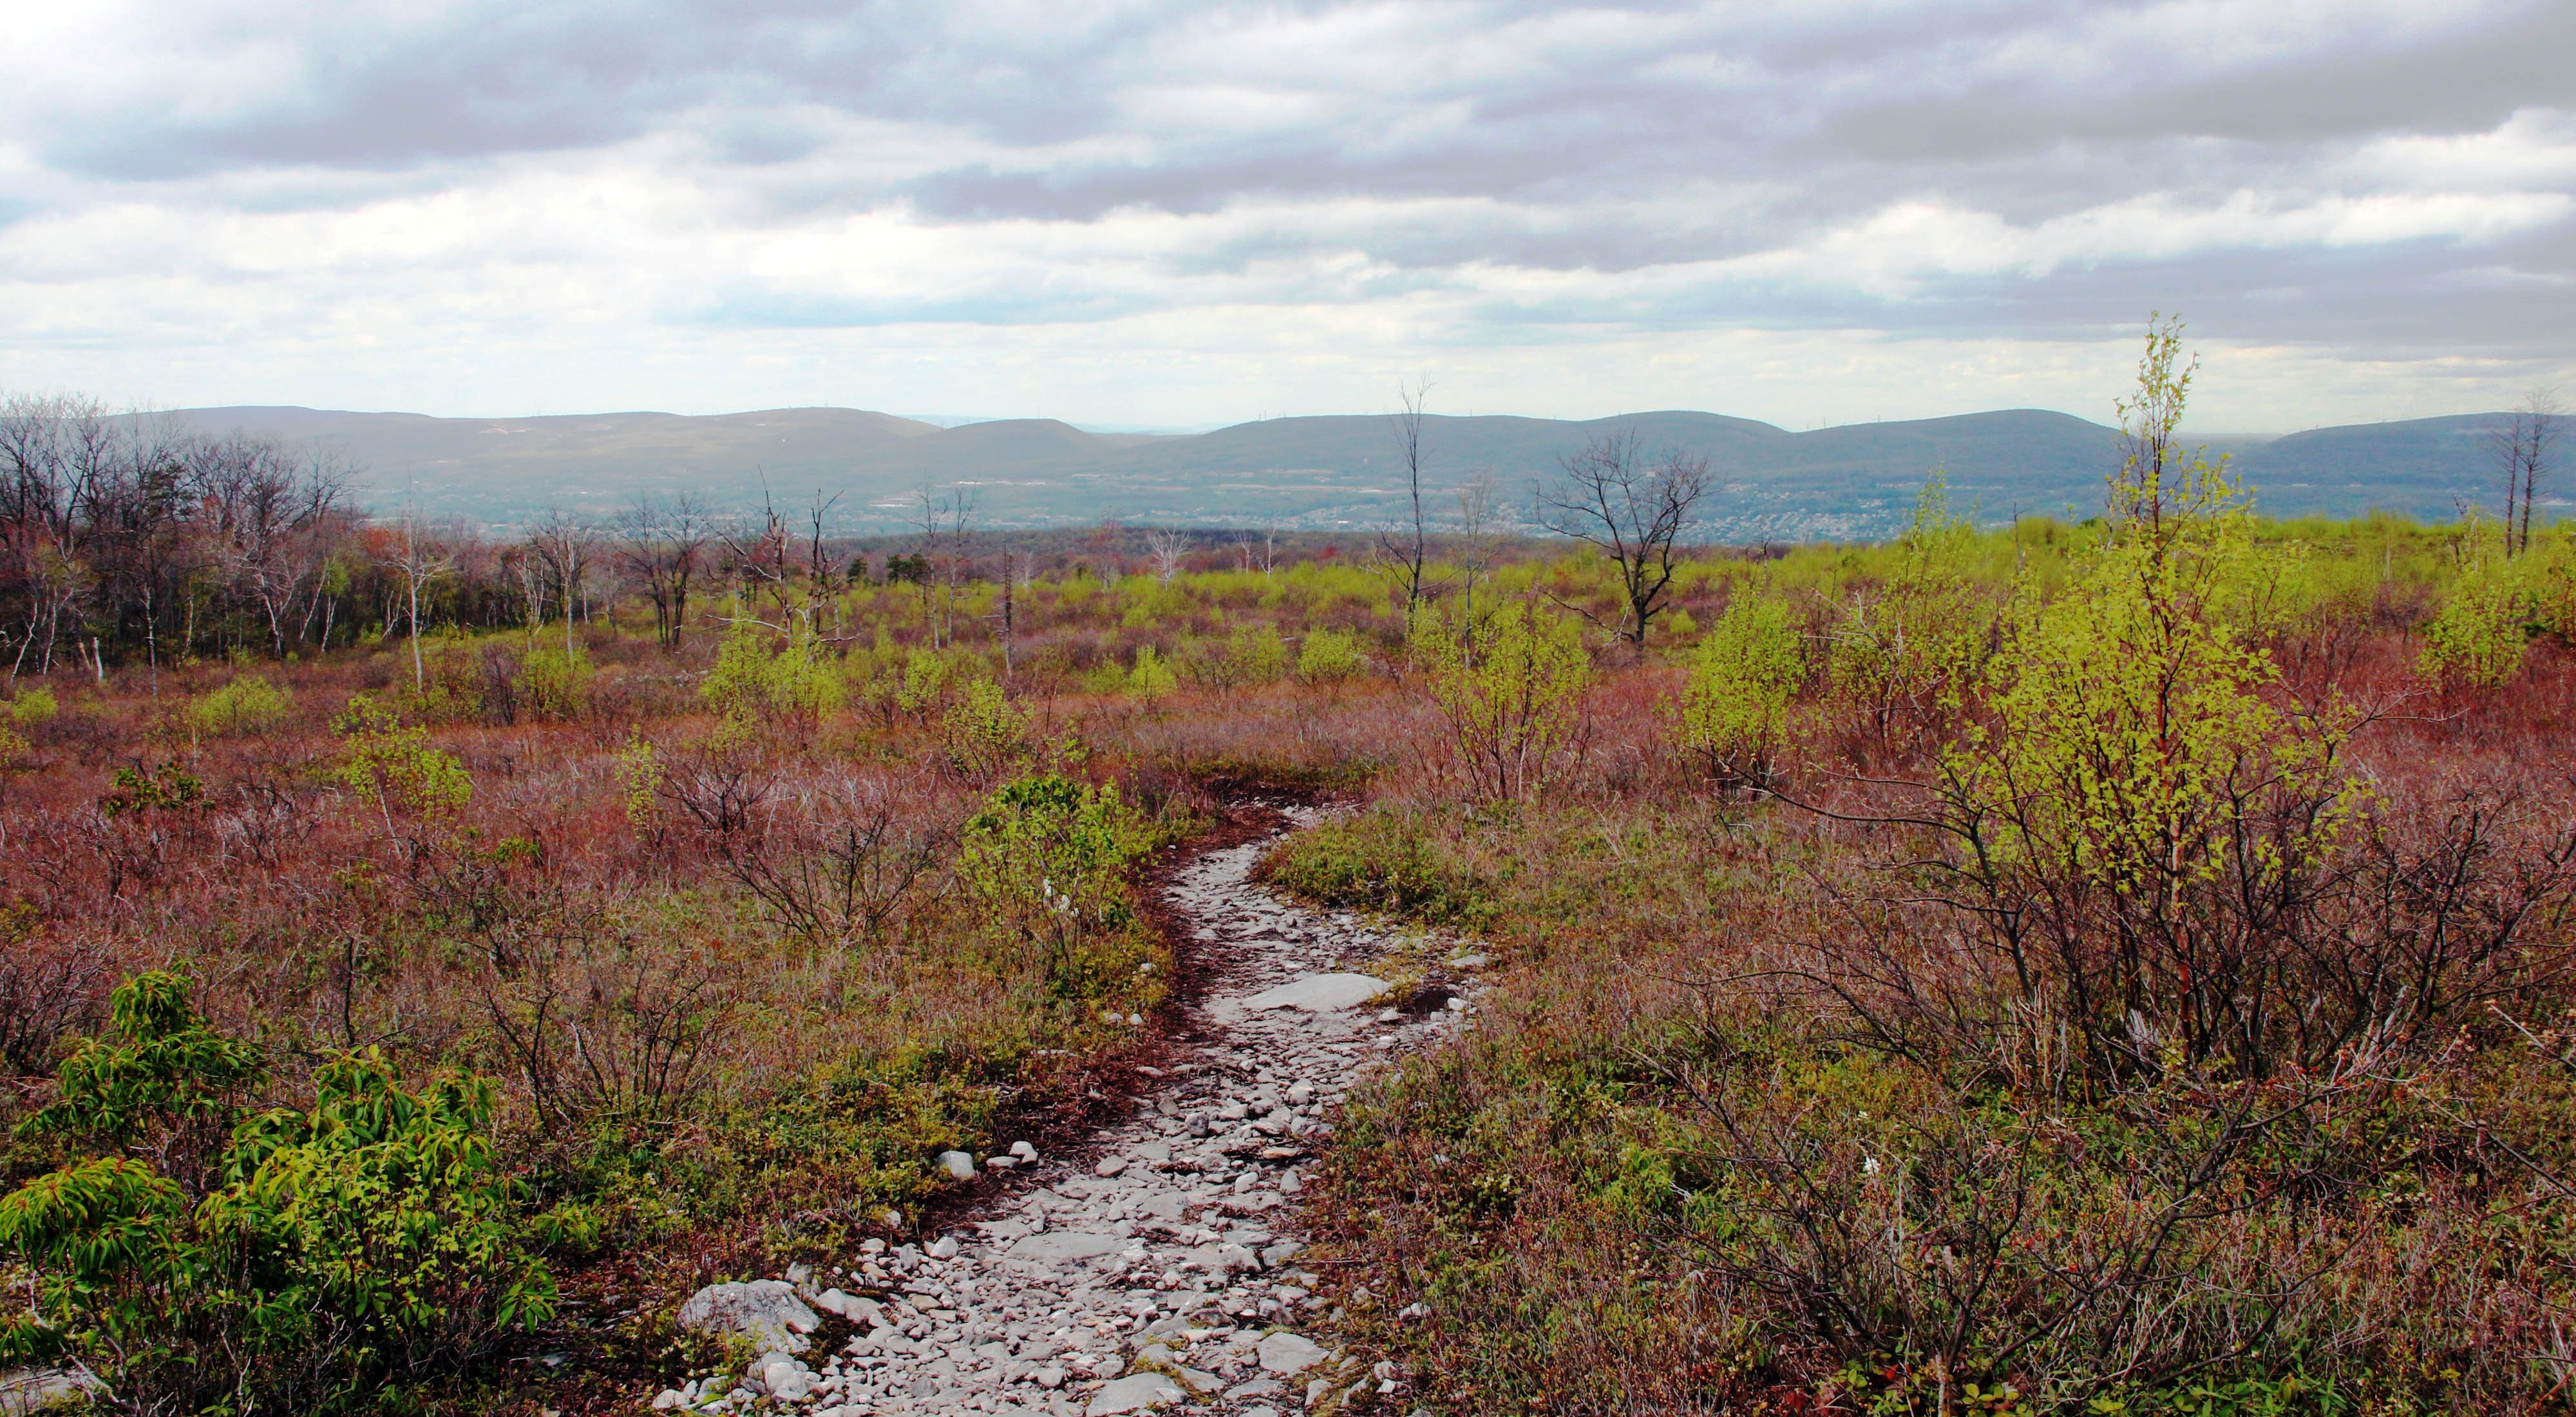 A dirt path winds through a colorful barrens landscape.